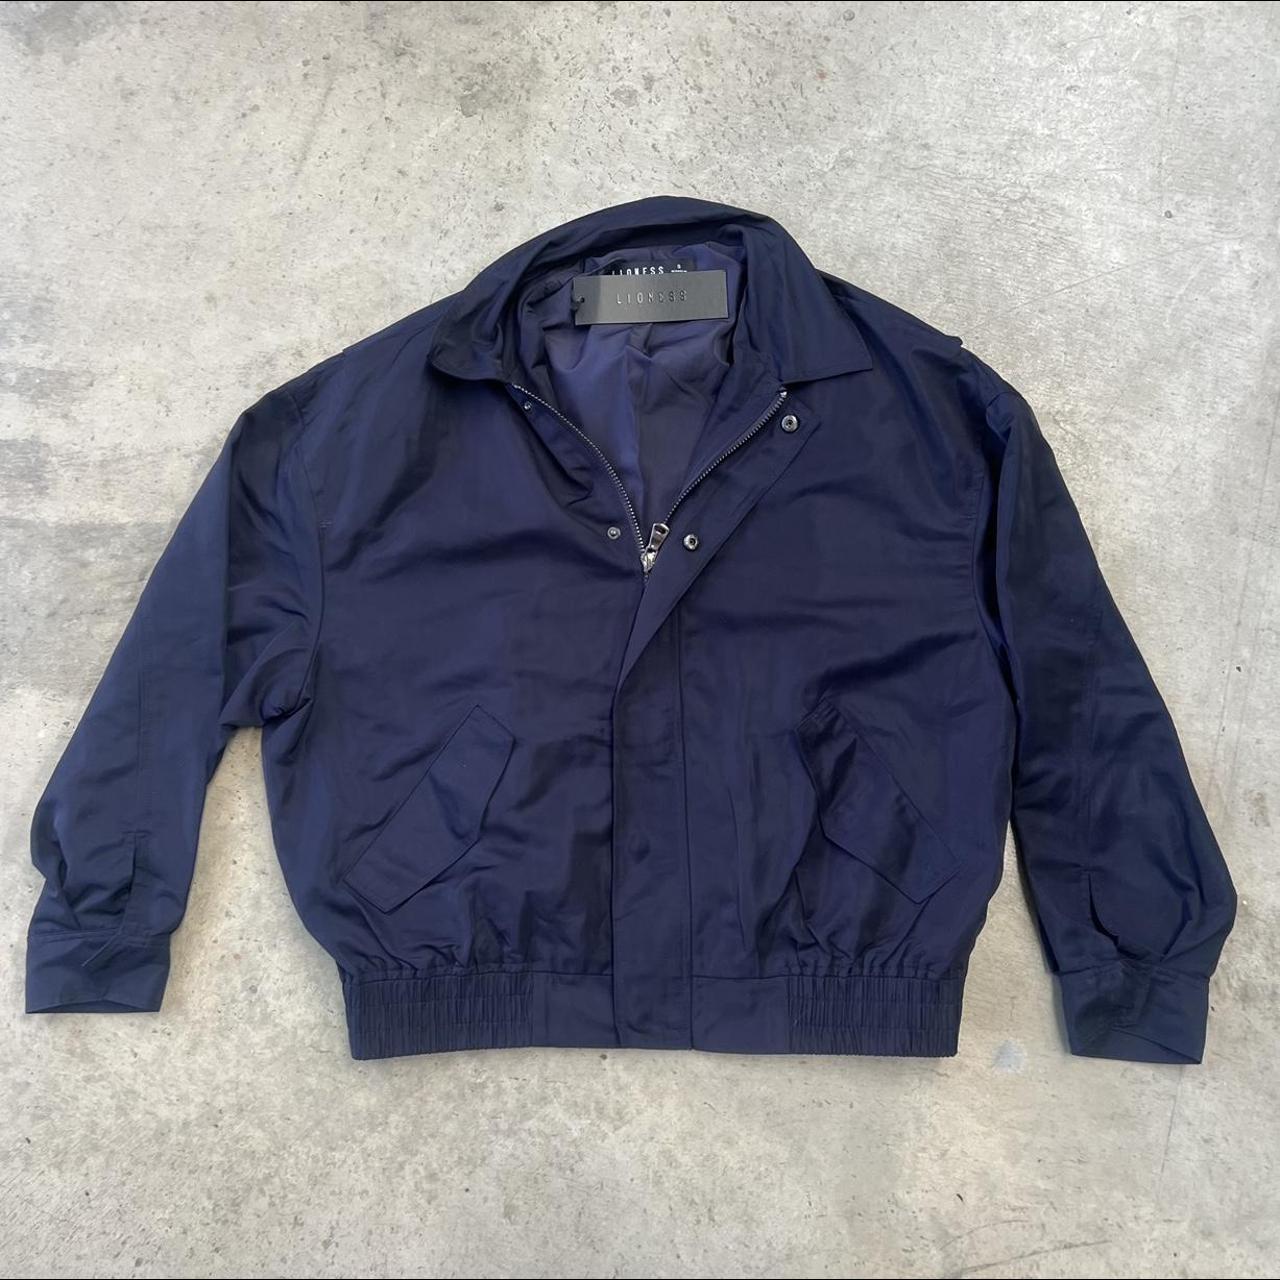 LIONESS - Kenny bomber jacket in blue. Sold out... - Depop